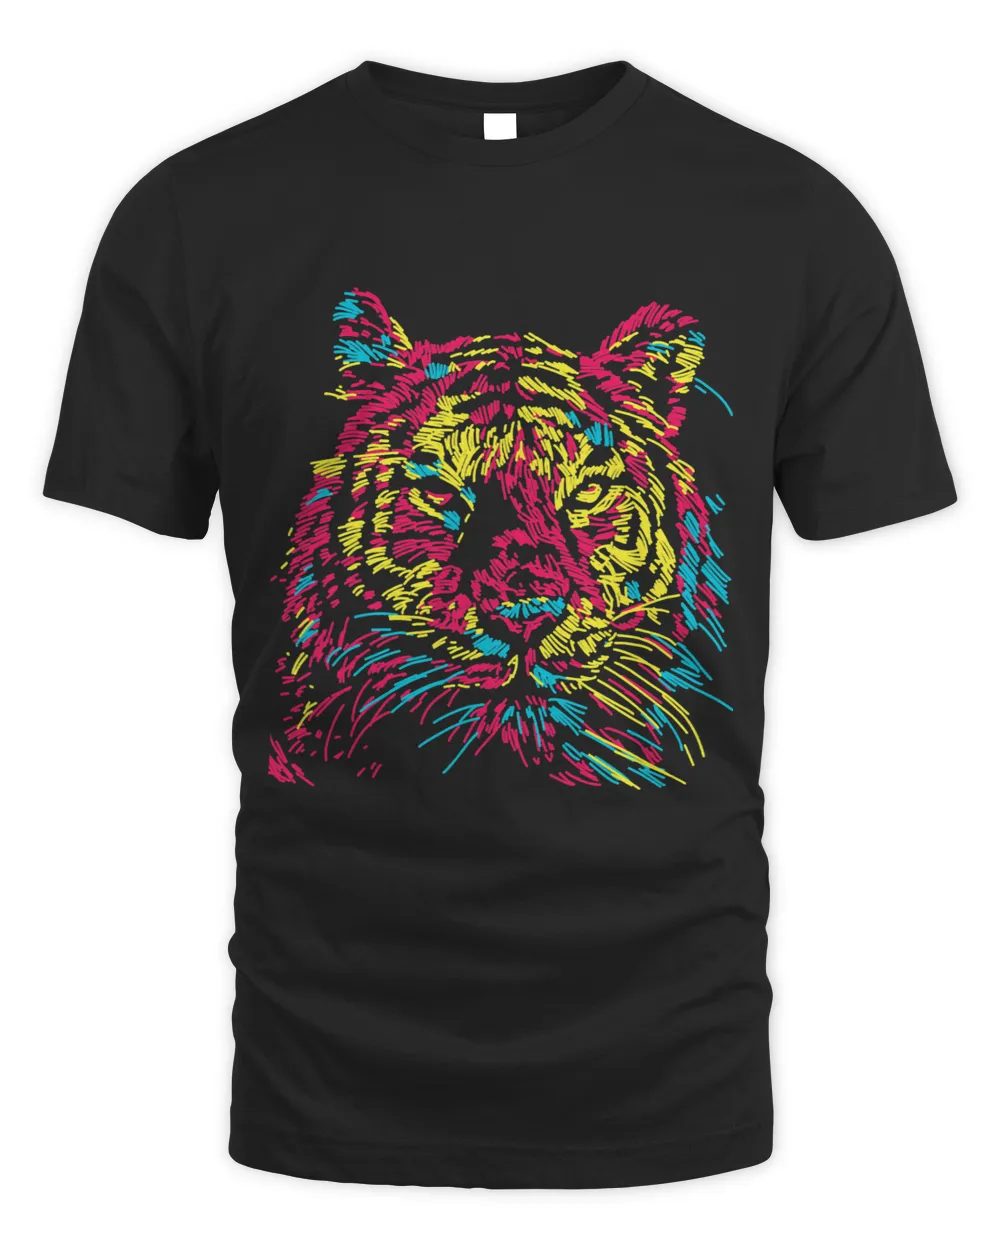 Tiger Colorful Tiger Tee shirts Tigers Fashion Graphic Design